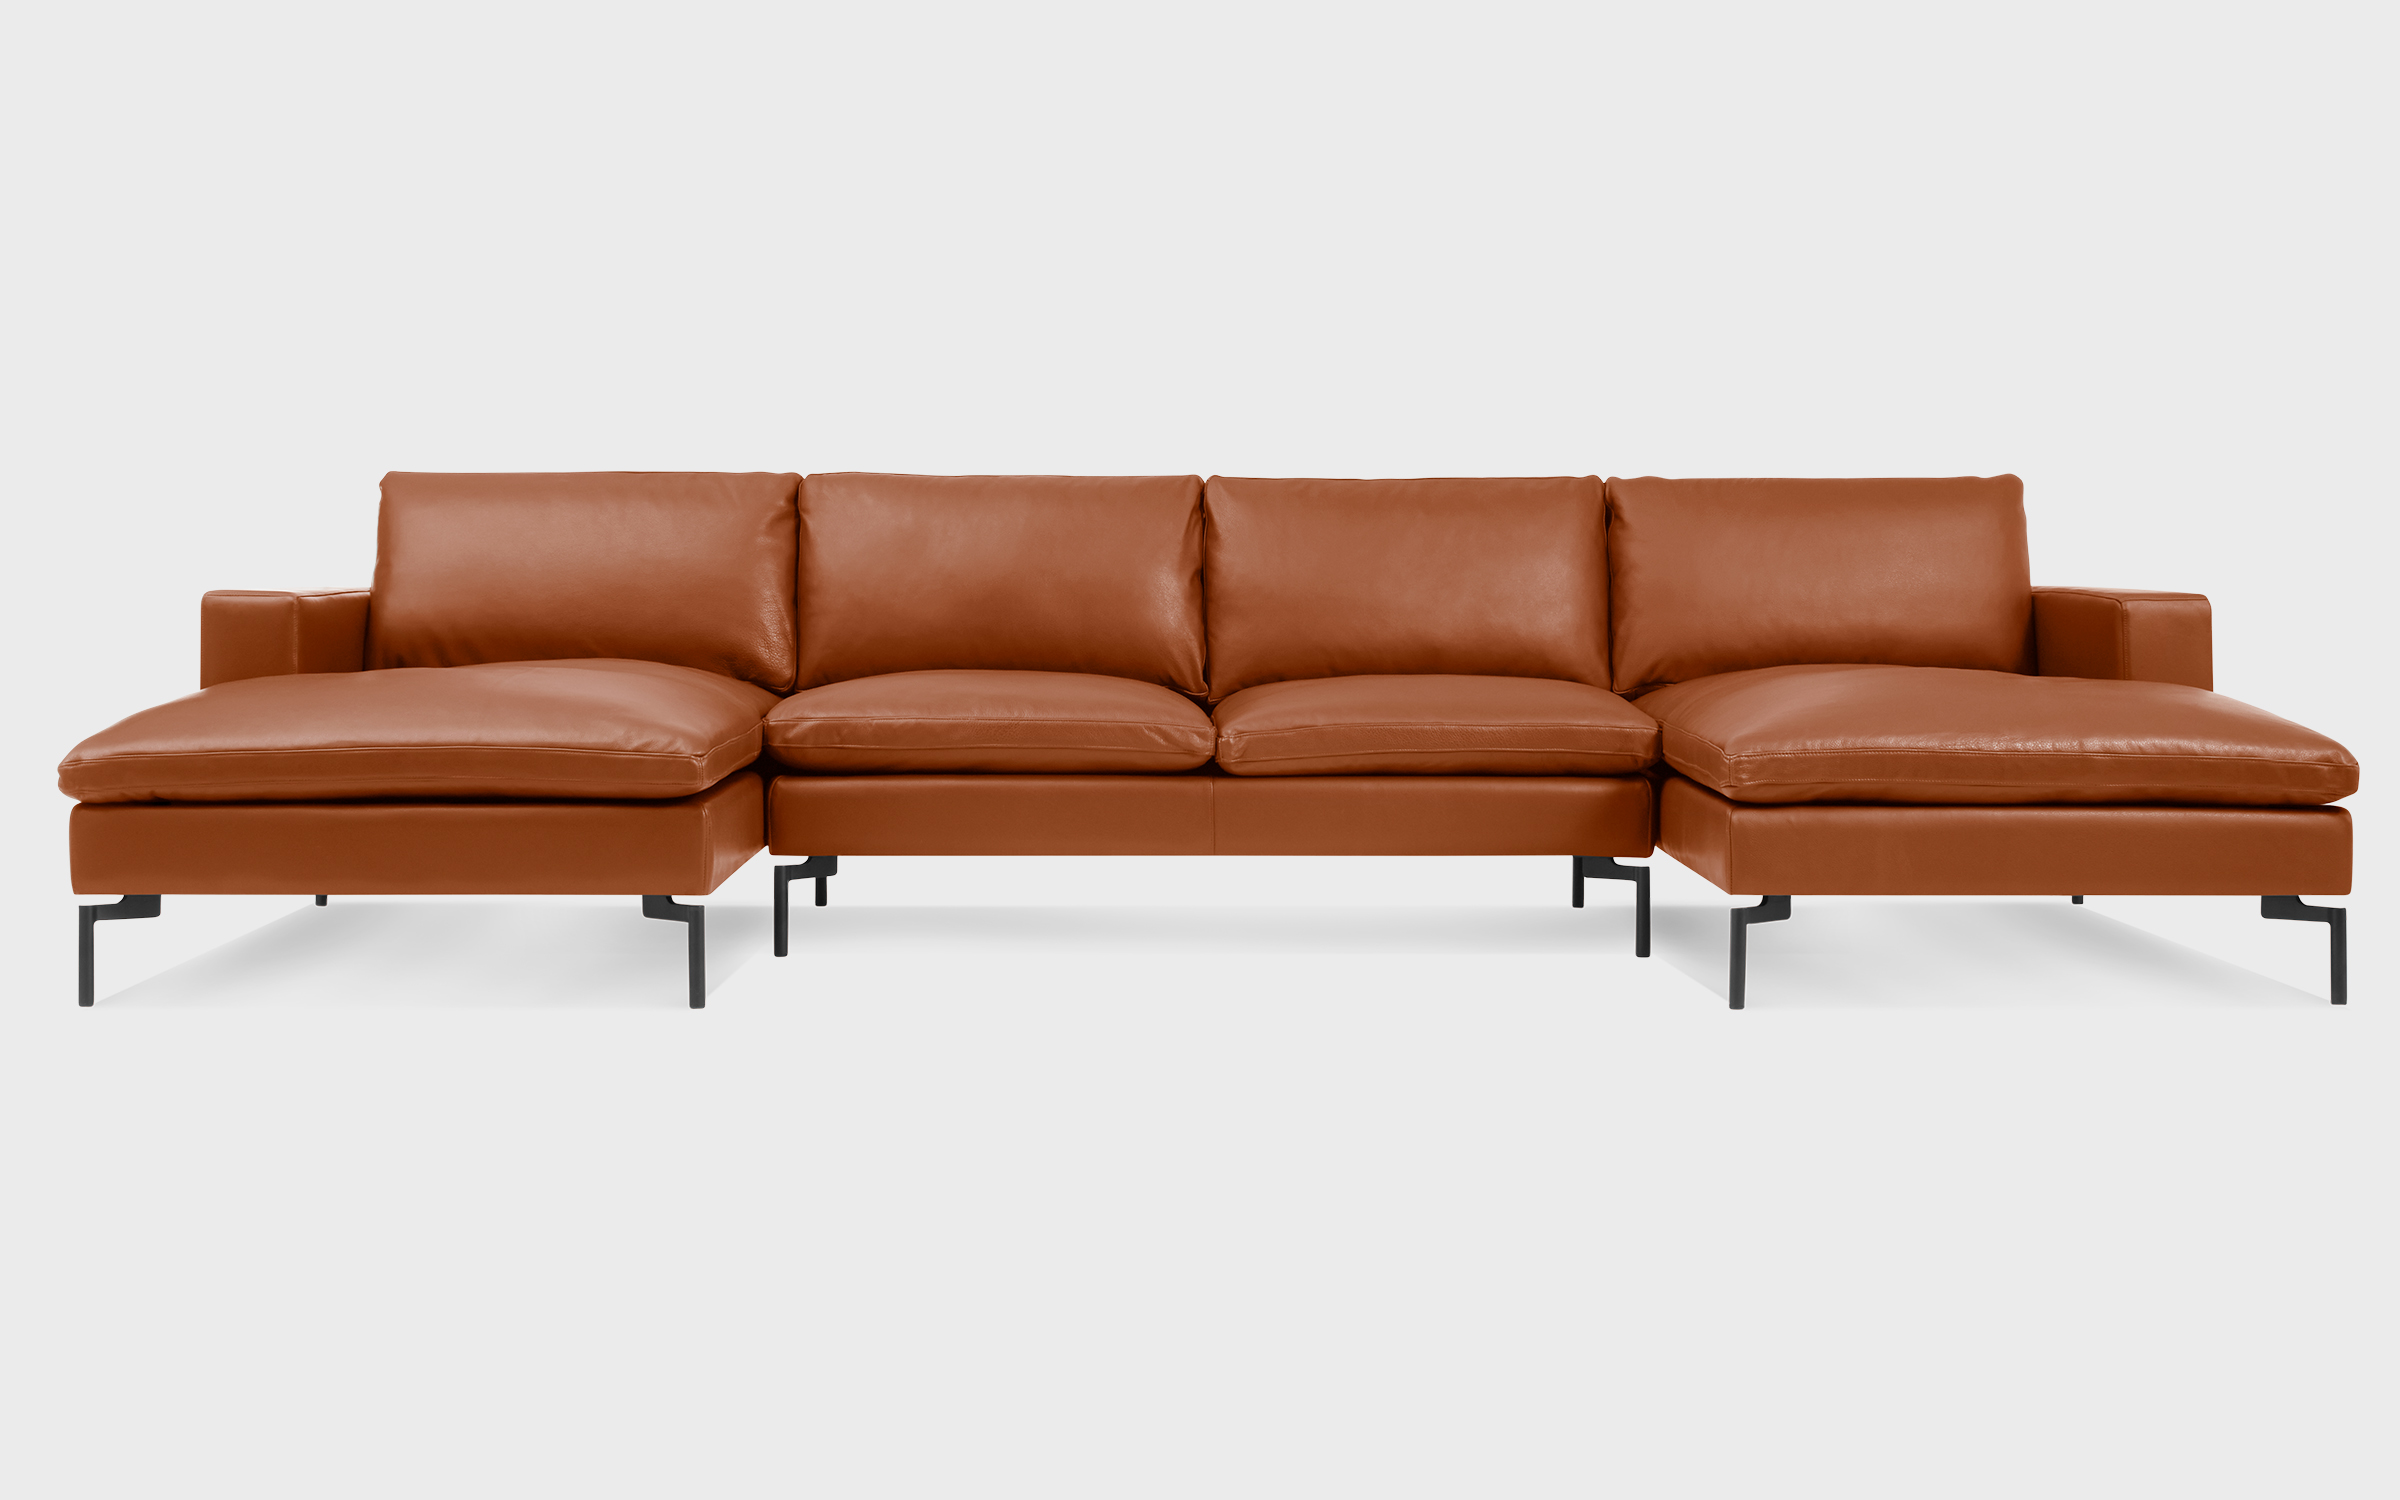 New Standard U-Shaped Leather Sectional Sofa